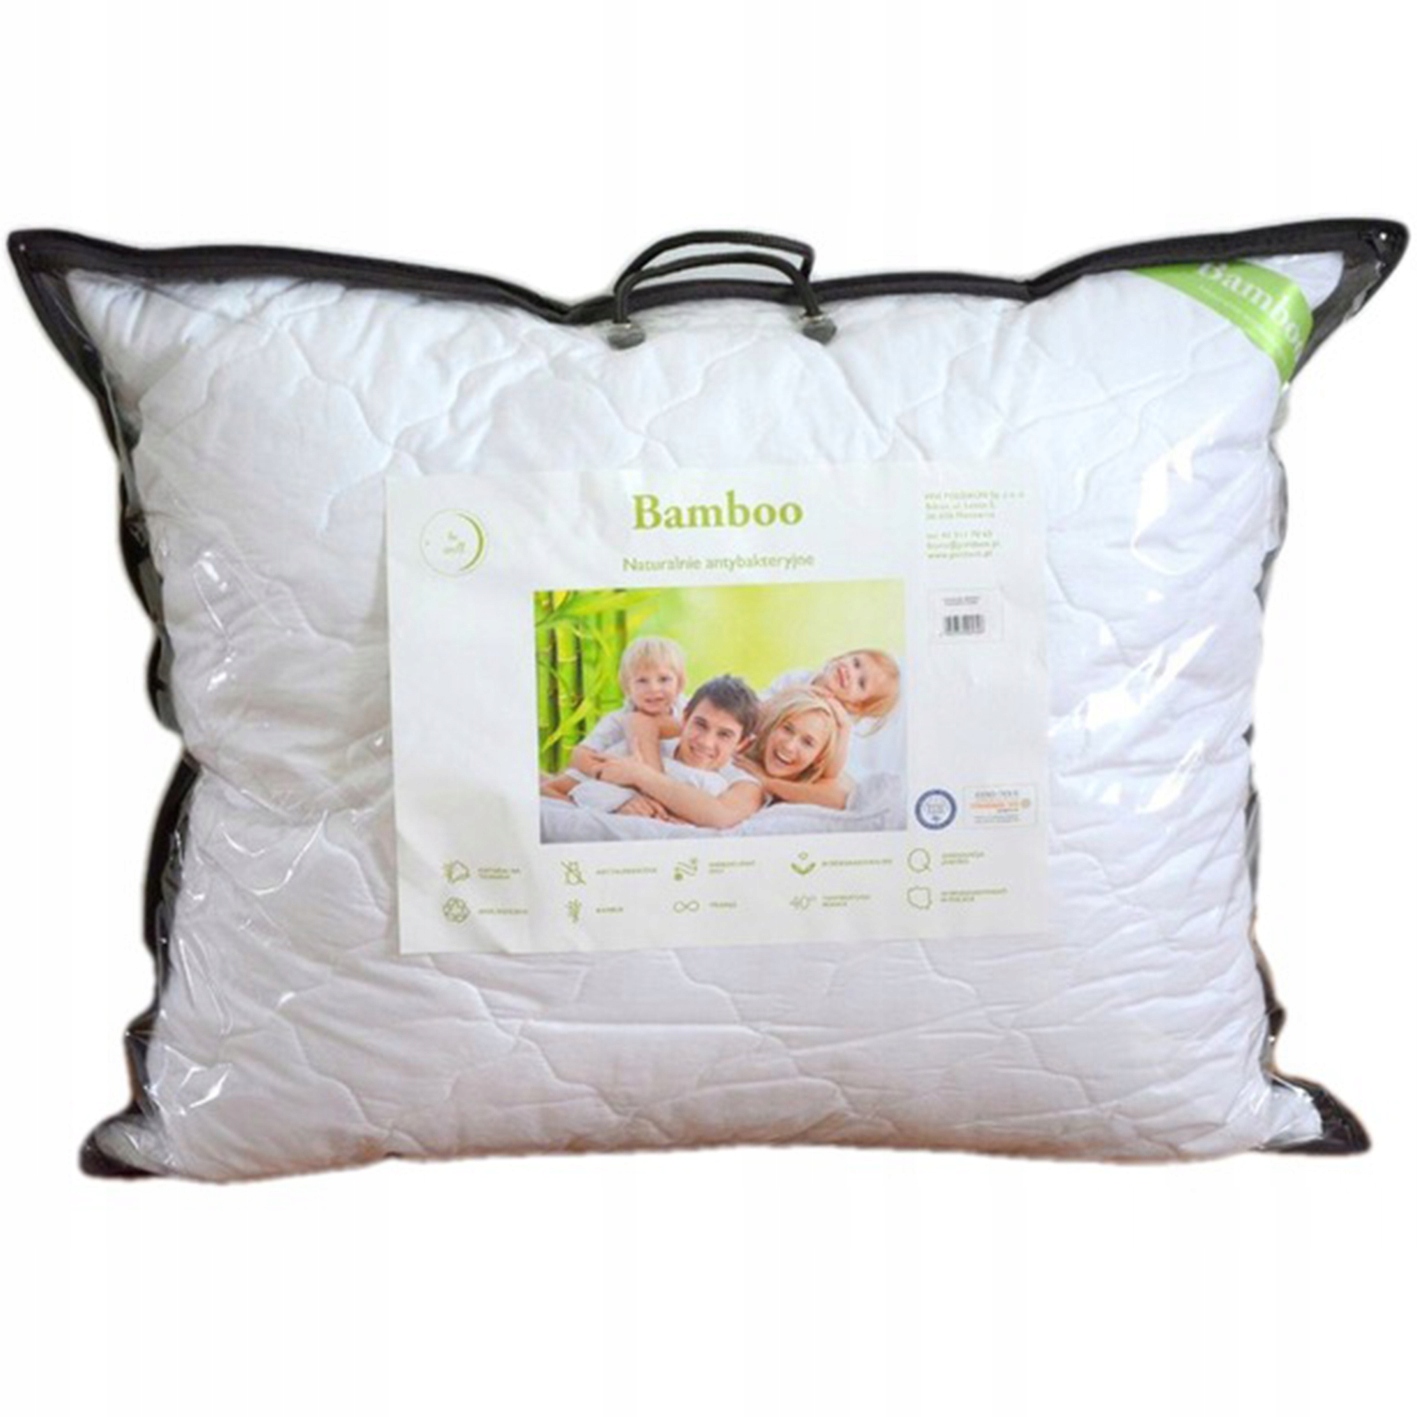 Бамбуковая подушка купить. Бамбуковая подушка. Подушка бамбук. Подушка Bamboo. Бамбуковые подушки и одеяла.